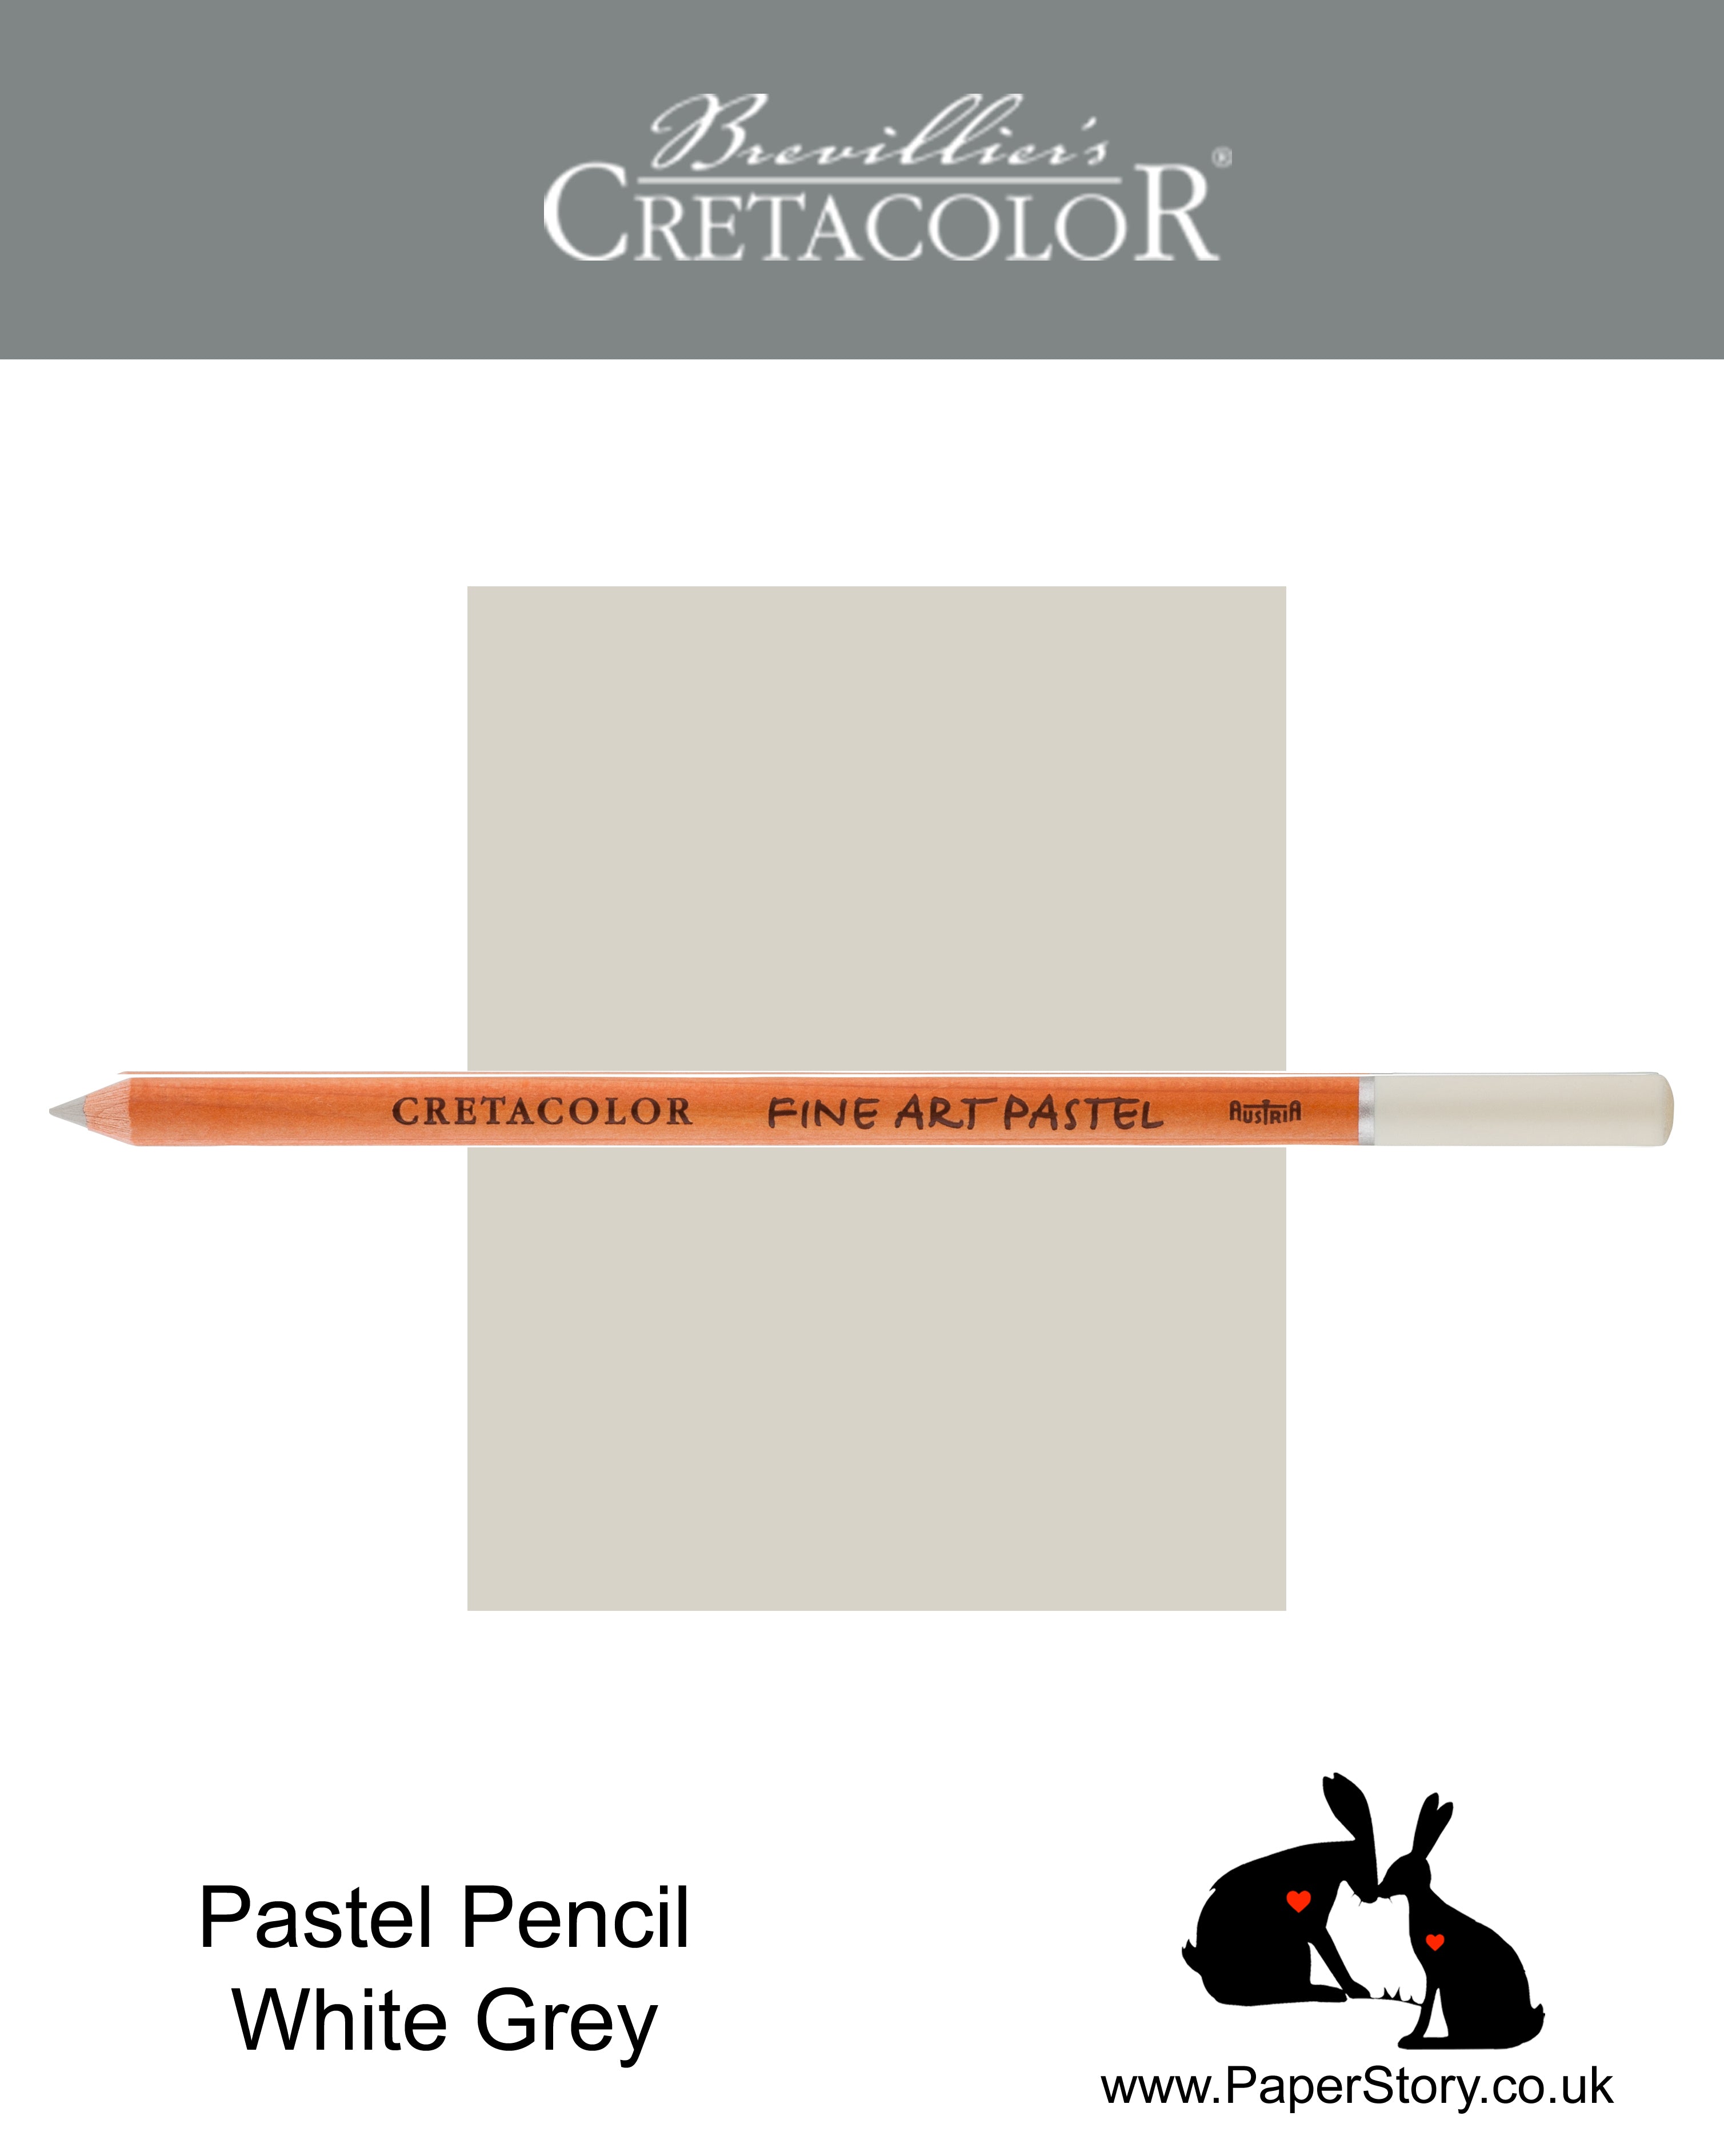 Cretacolor White Chalk Pencil